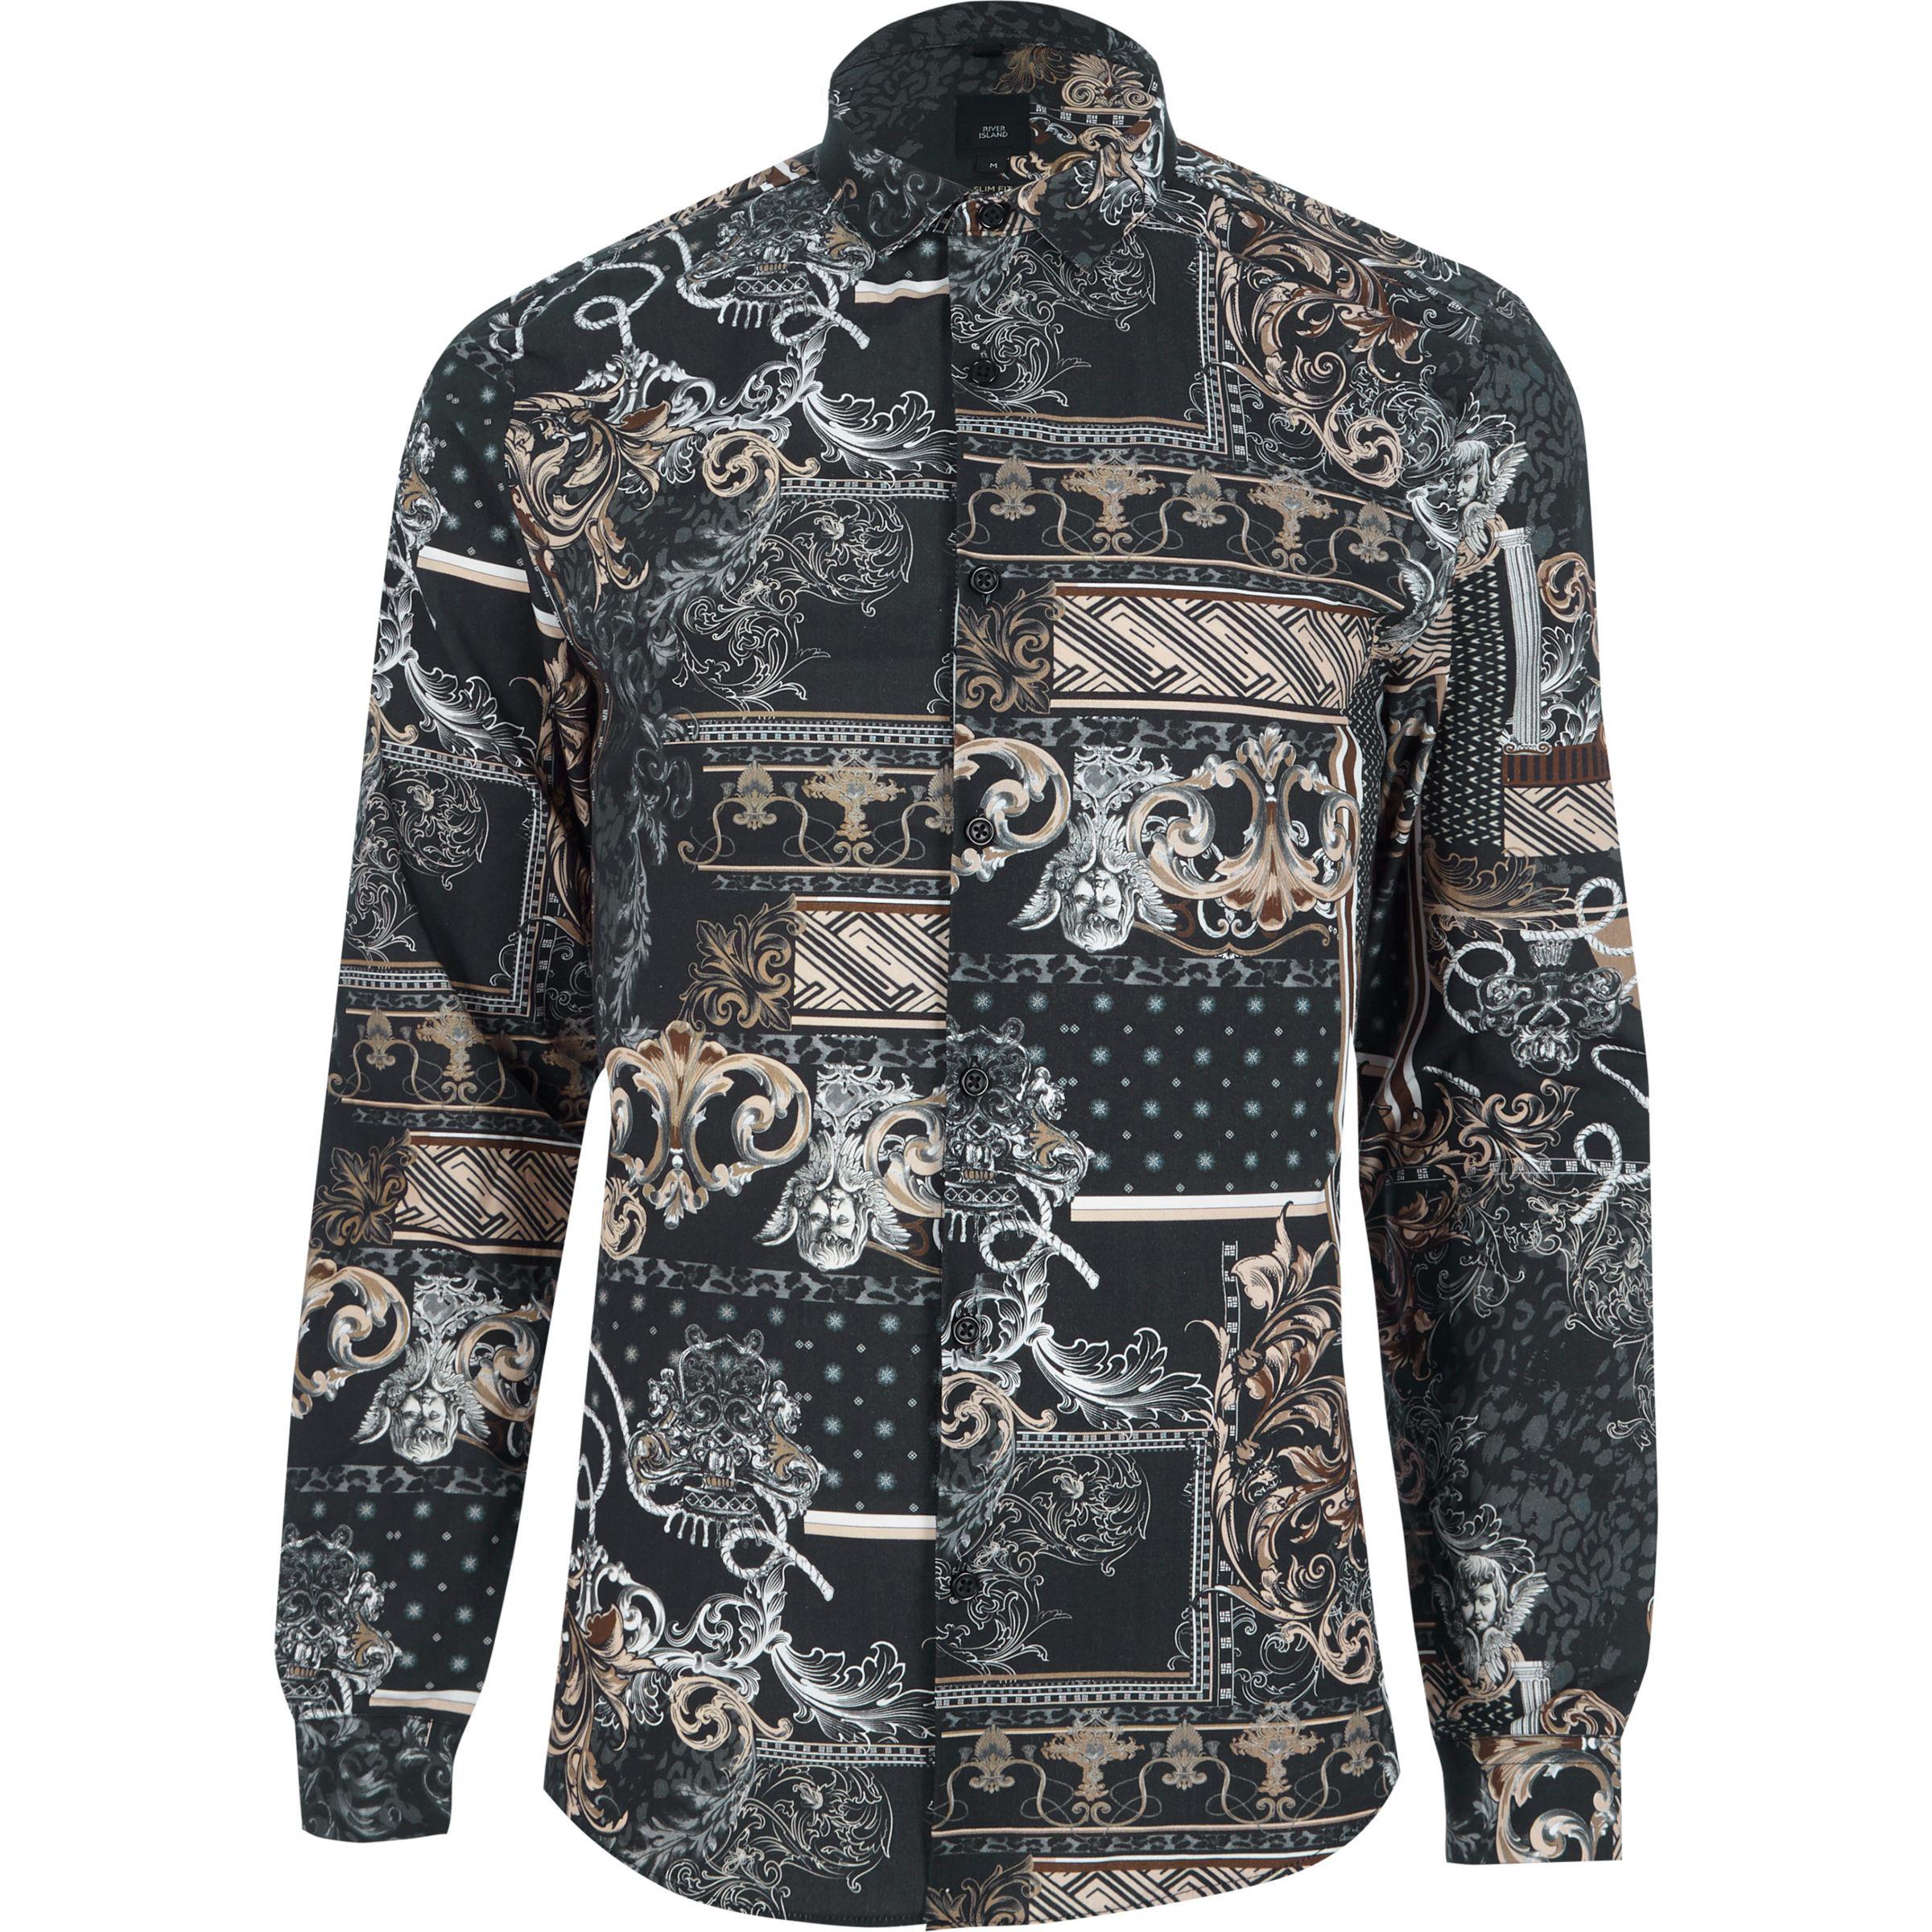 River Island Cotton Baroque Print Slim Fit Shirt in Black for Men - Lyst